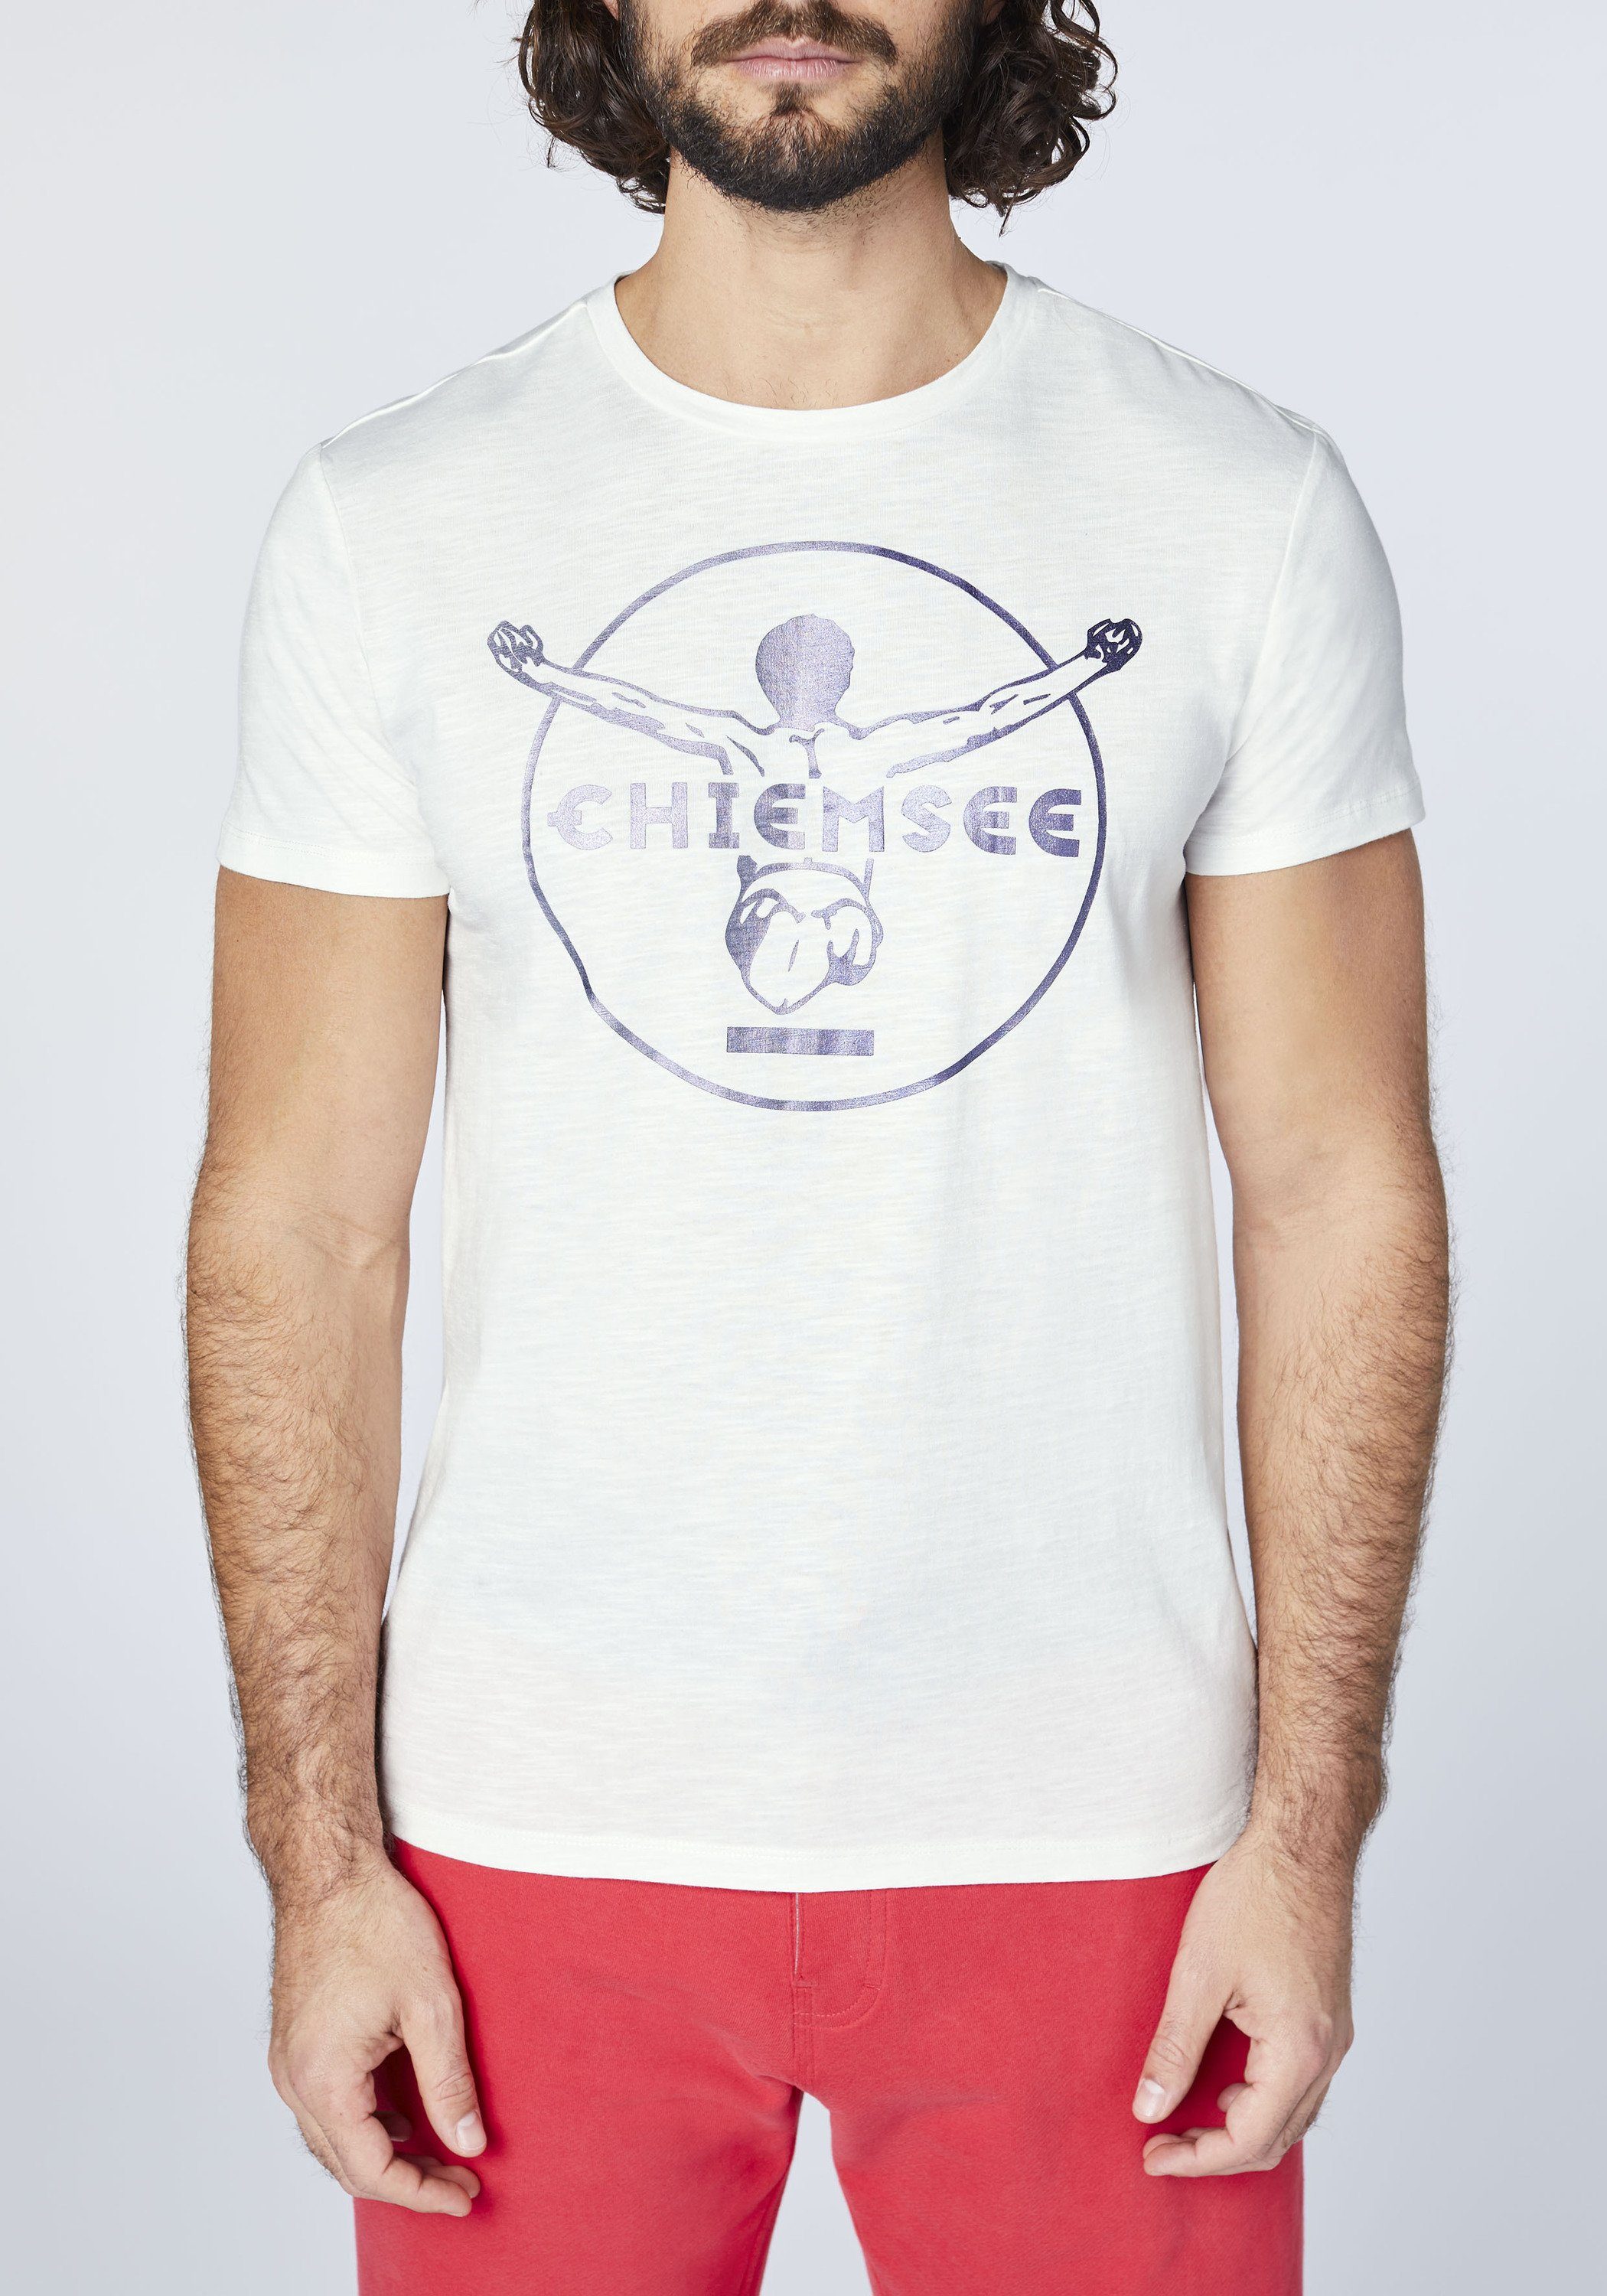 mit Print-Shirt 1 White gedrucktem Label-Symbol Star T-Shirt Chiemsee